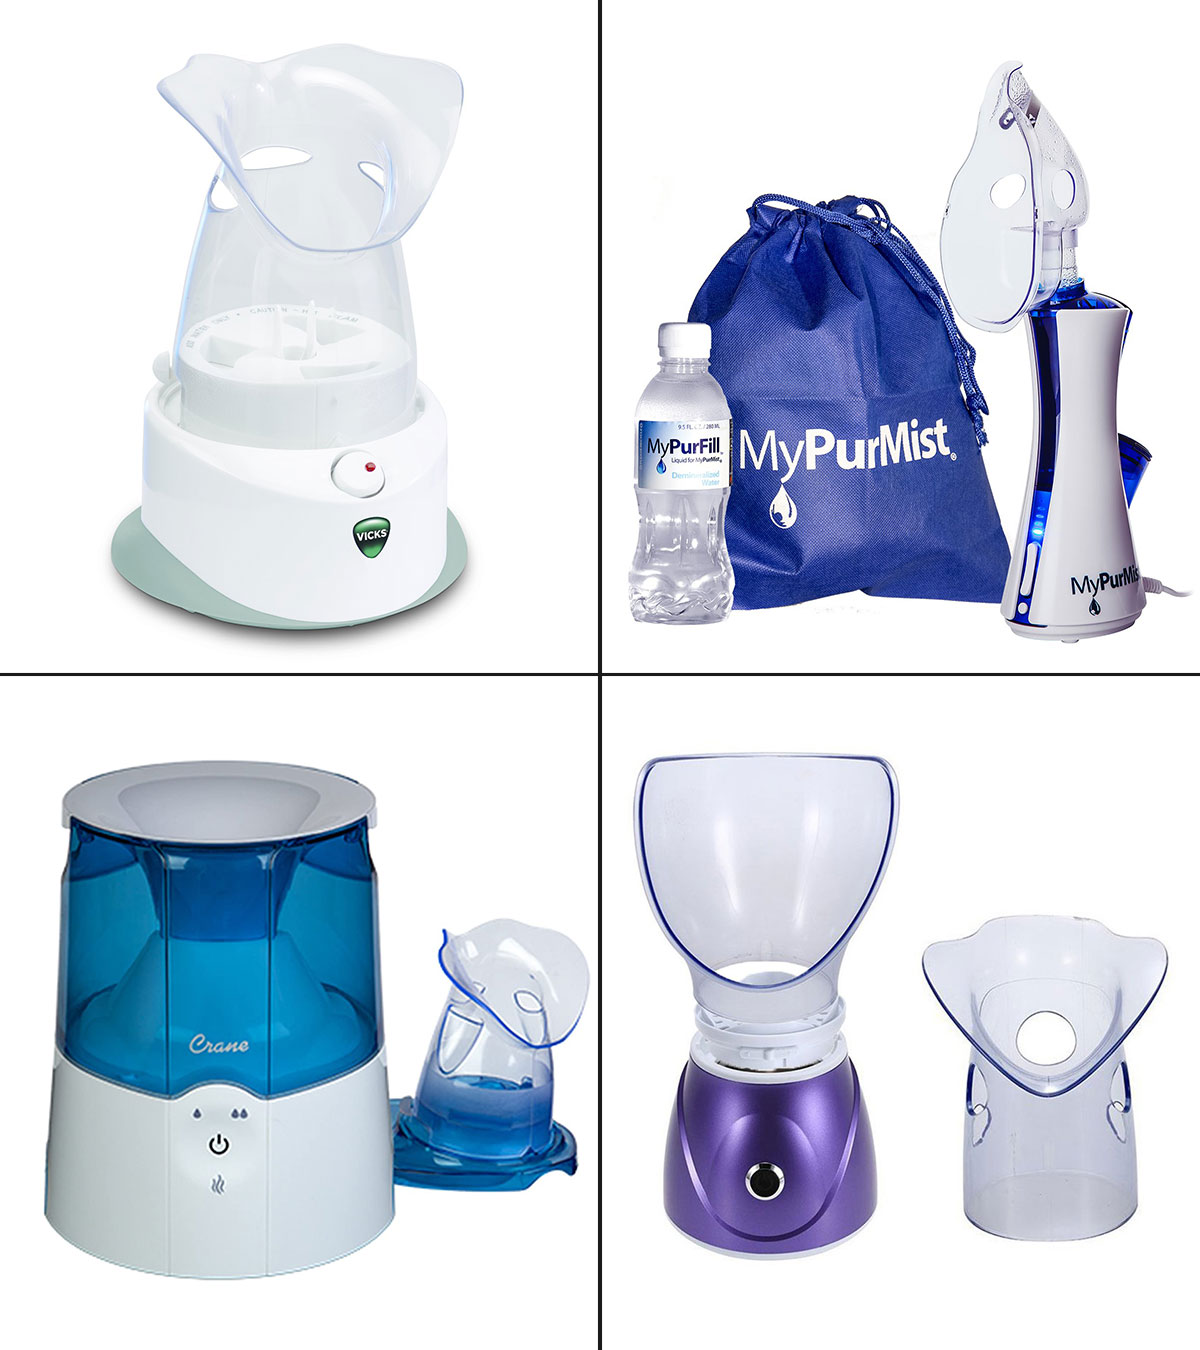 https://www.momjunction.com/wp-content/uploads/2020/03/8-Best-Steam-Inhalers-To-Buy-In-2020.jpg